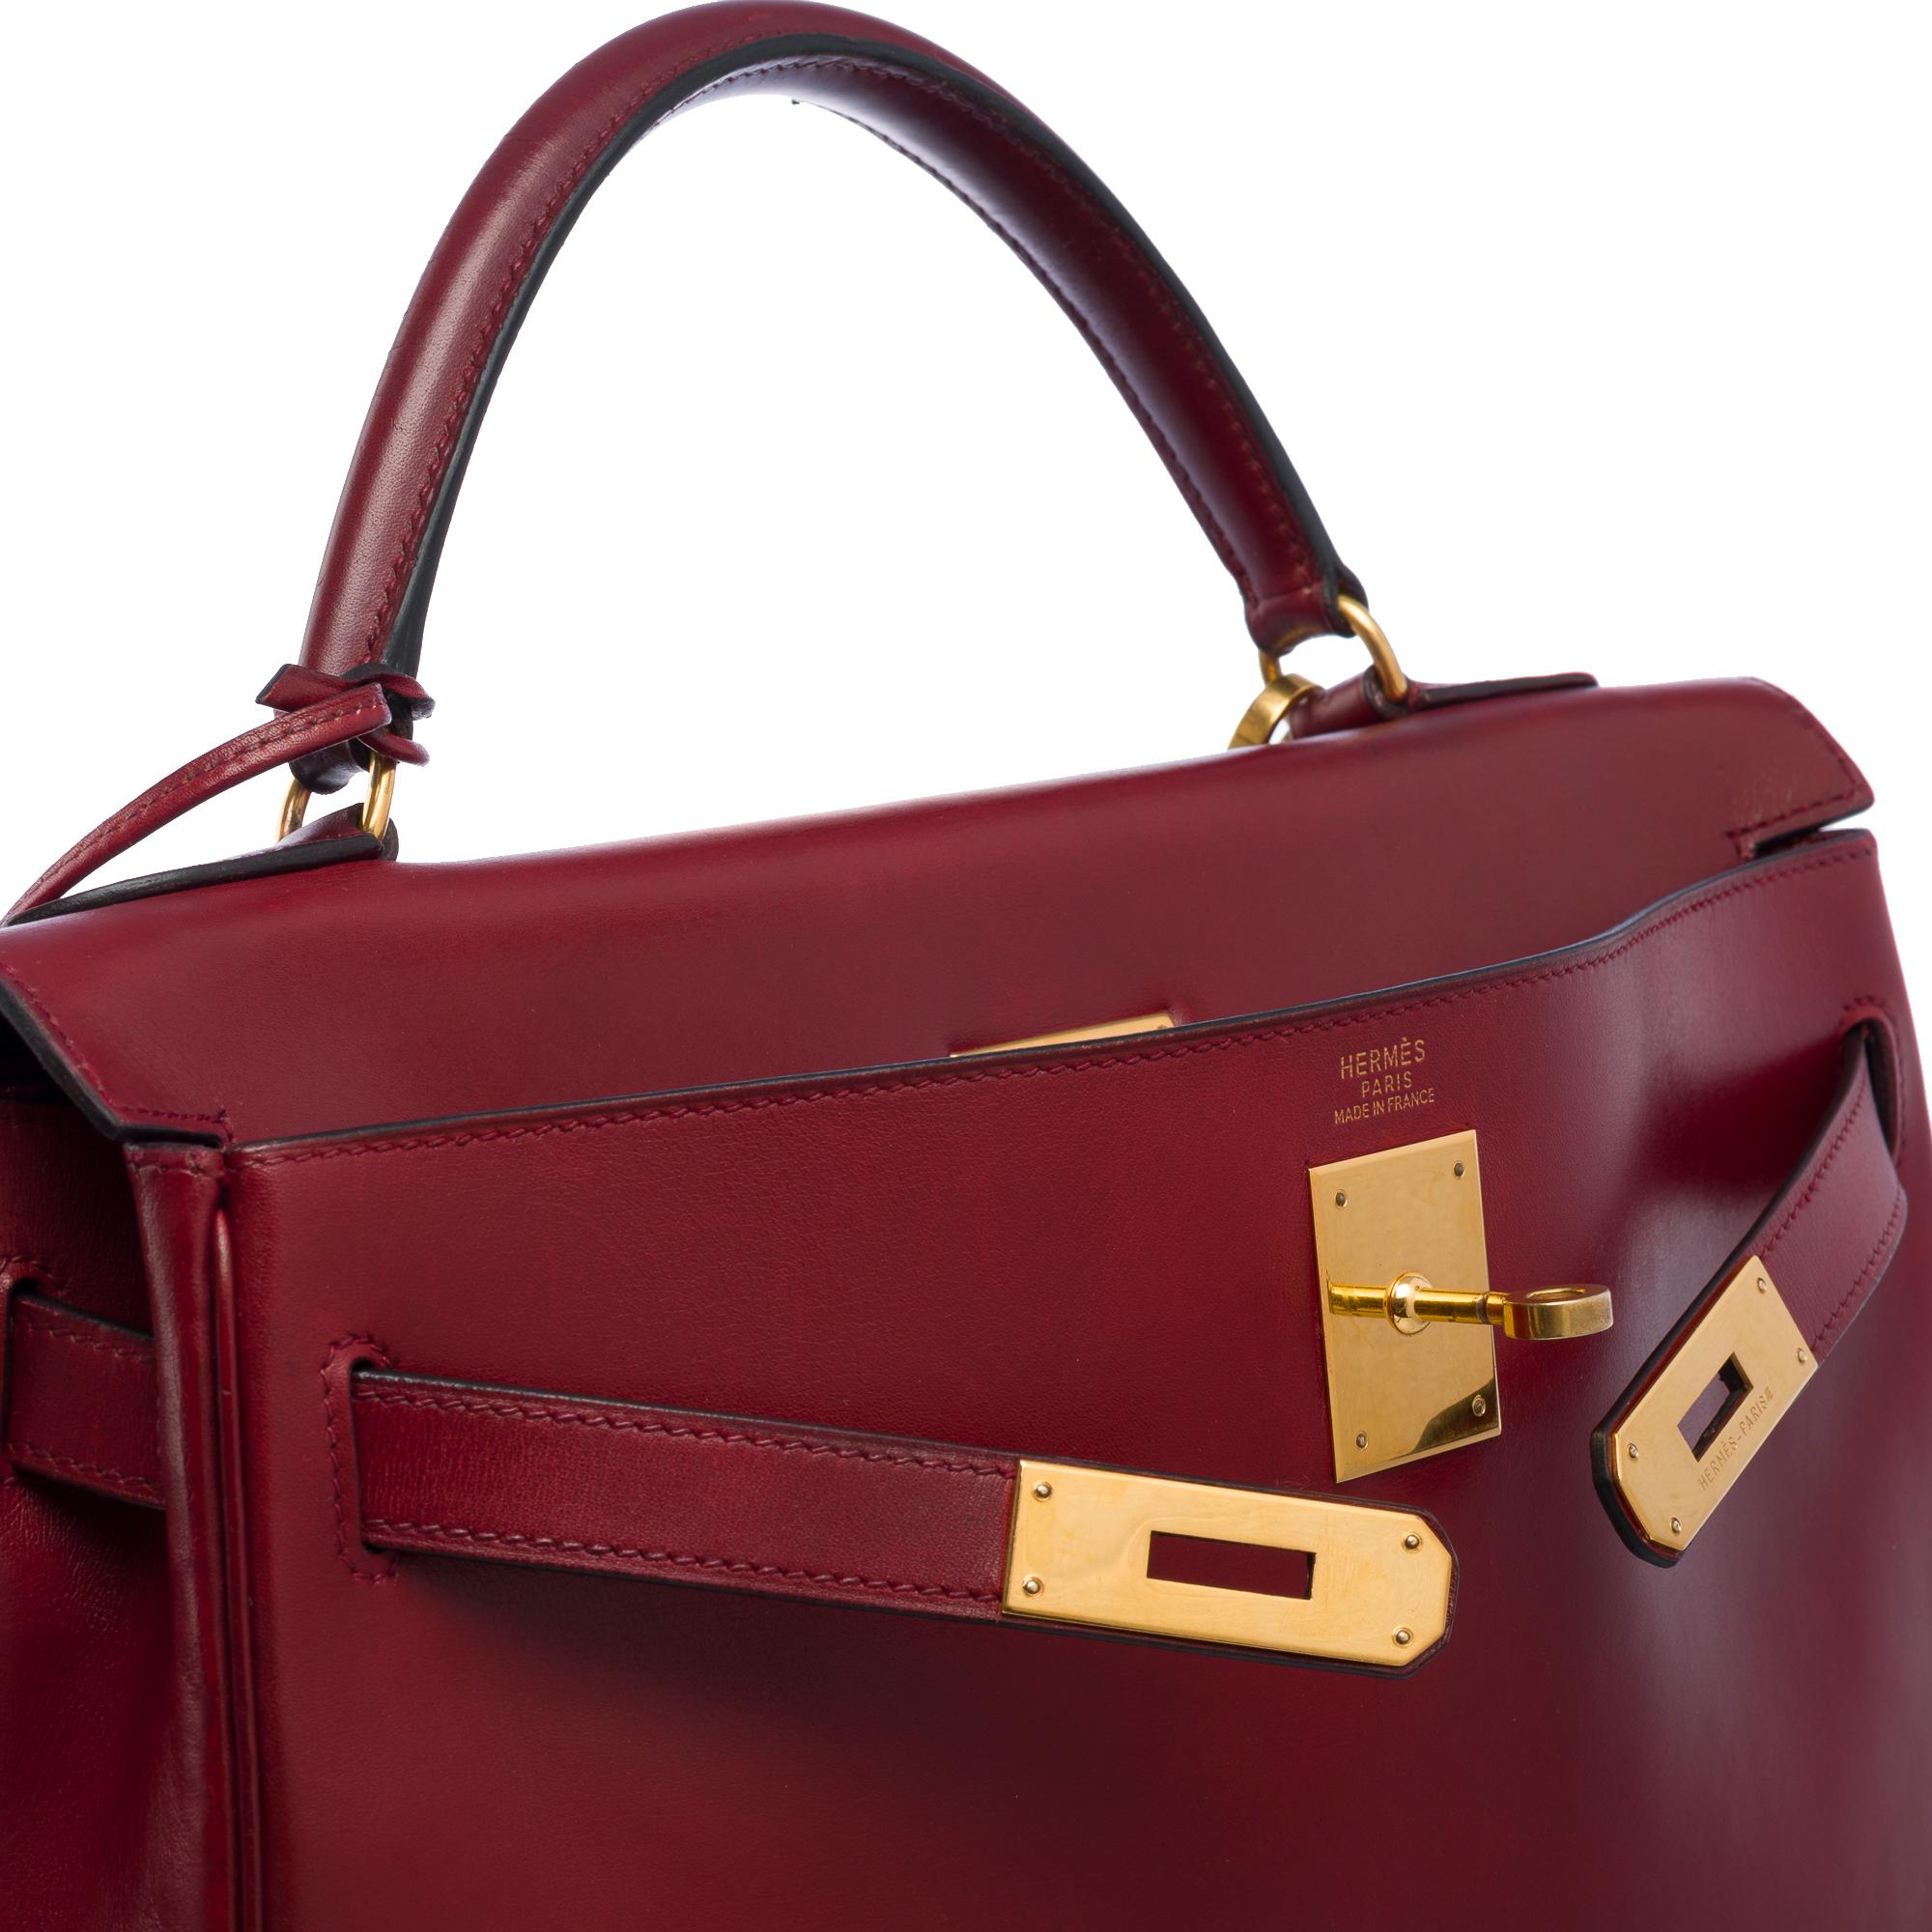 Hermès Kelly 32 retourne handbag strap in Burgundy box calfskin leather, GHW 2